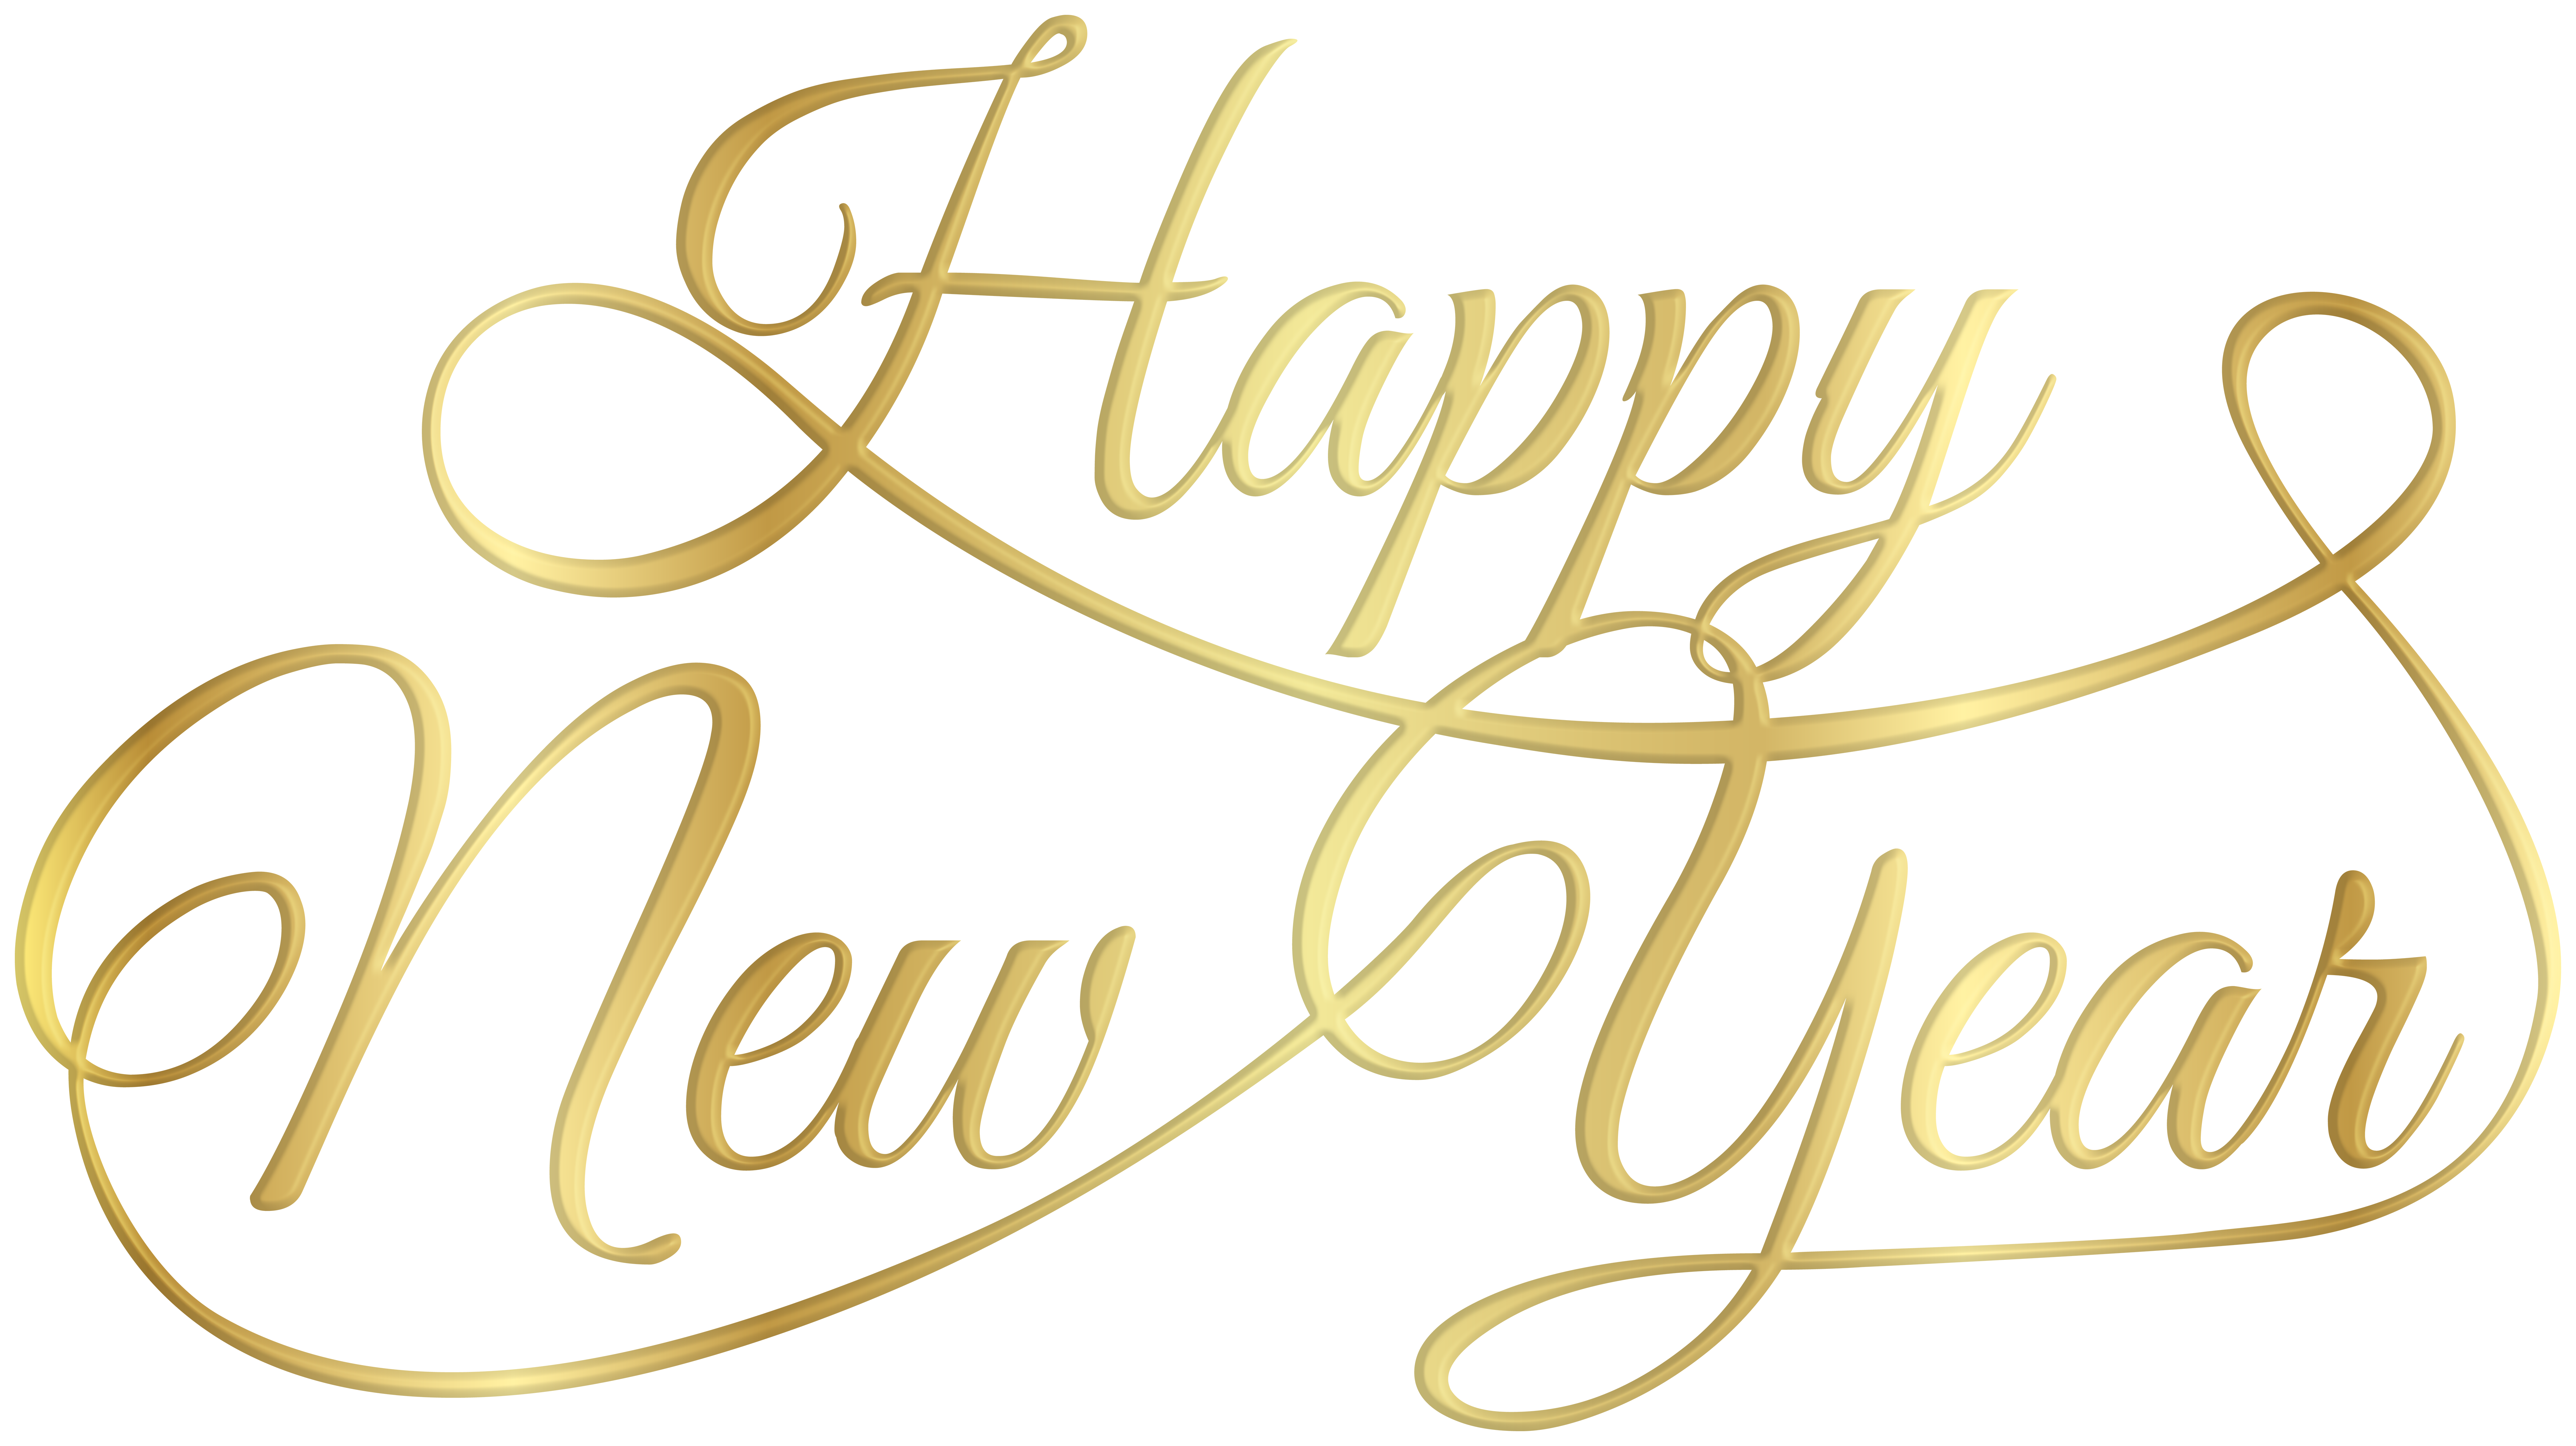 New years text. Happy New year на прозрачном фоне. Happy New year надпись. Happy New year красивая надпись на прозрачном фоне. Счастливого нового года надпись золото.